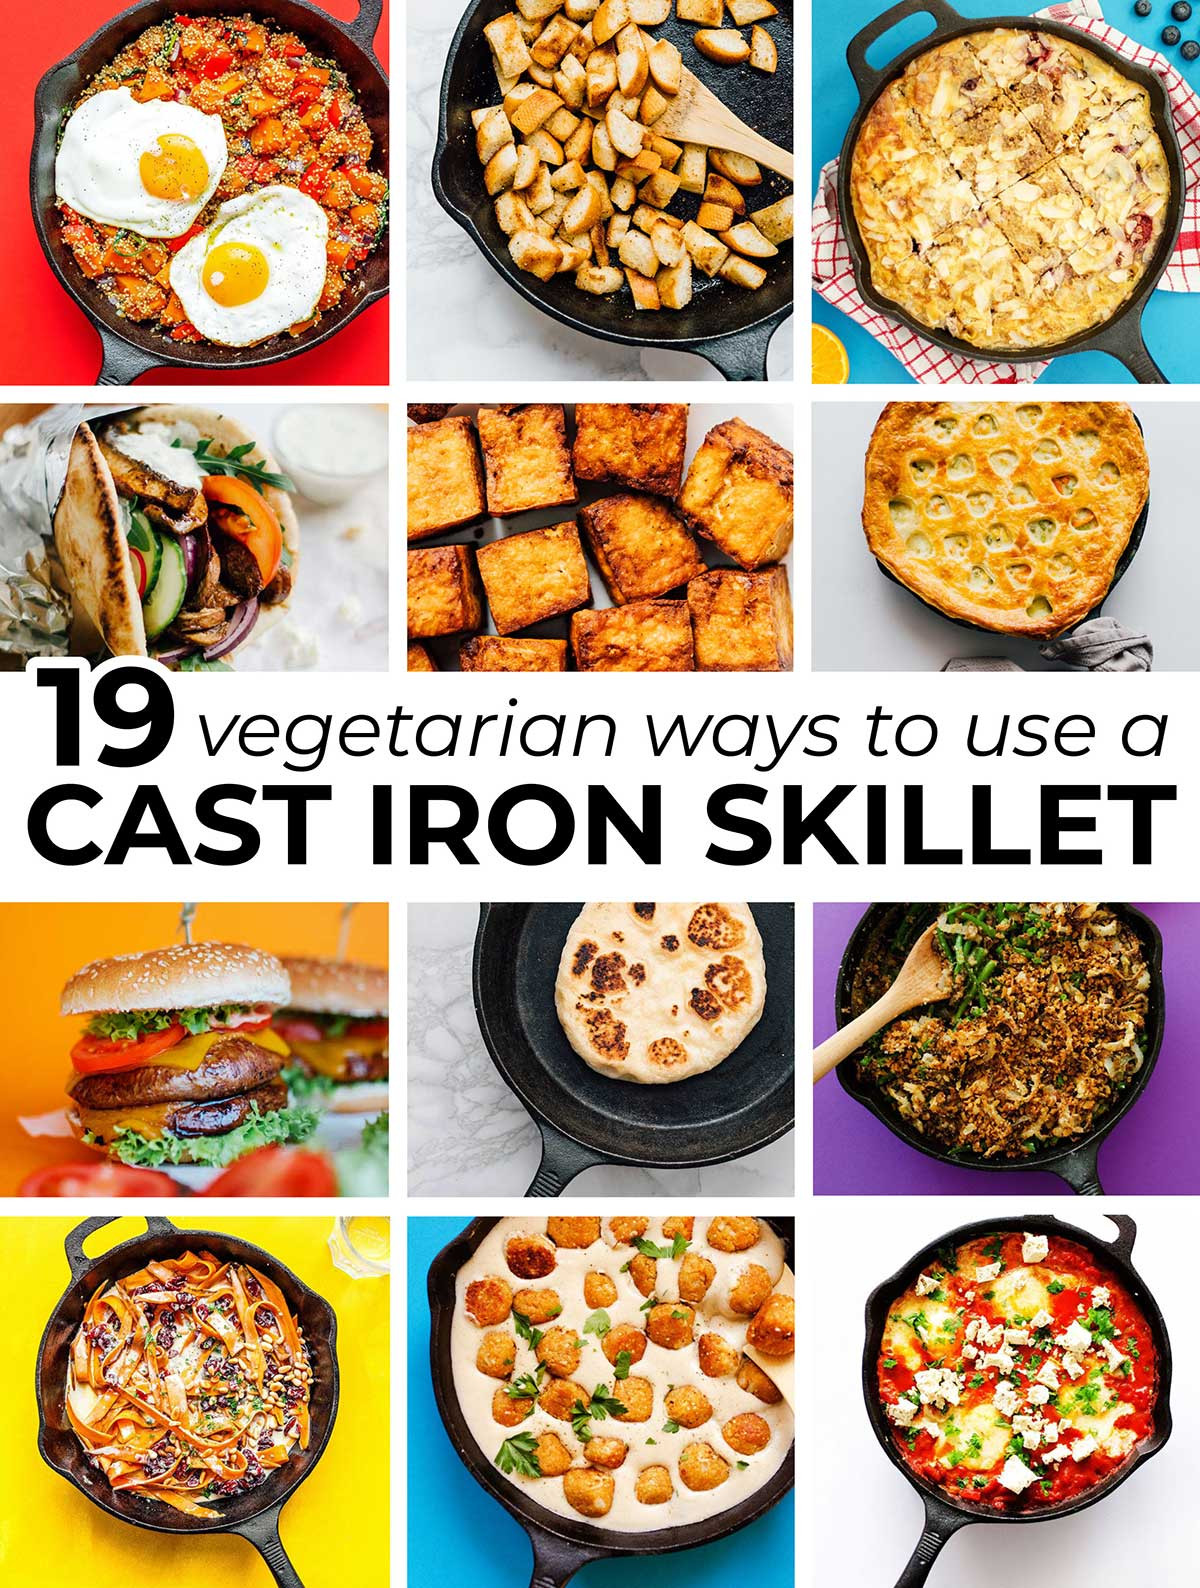 Vegetarian Cast Iron Skillet Recipes
 19 Ve arian Cast Iron Skillet Recipes